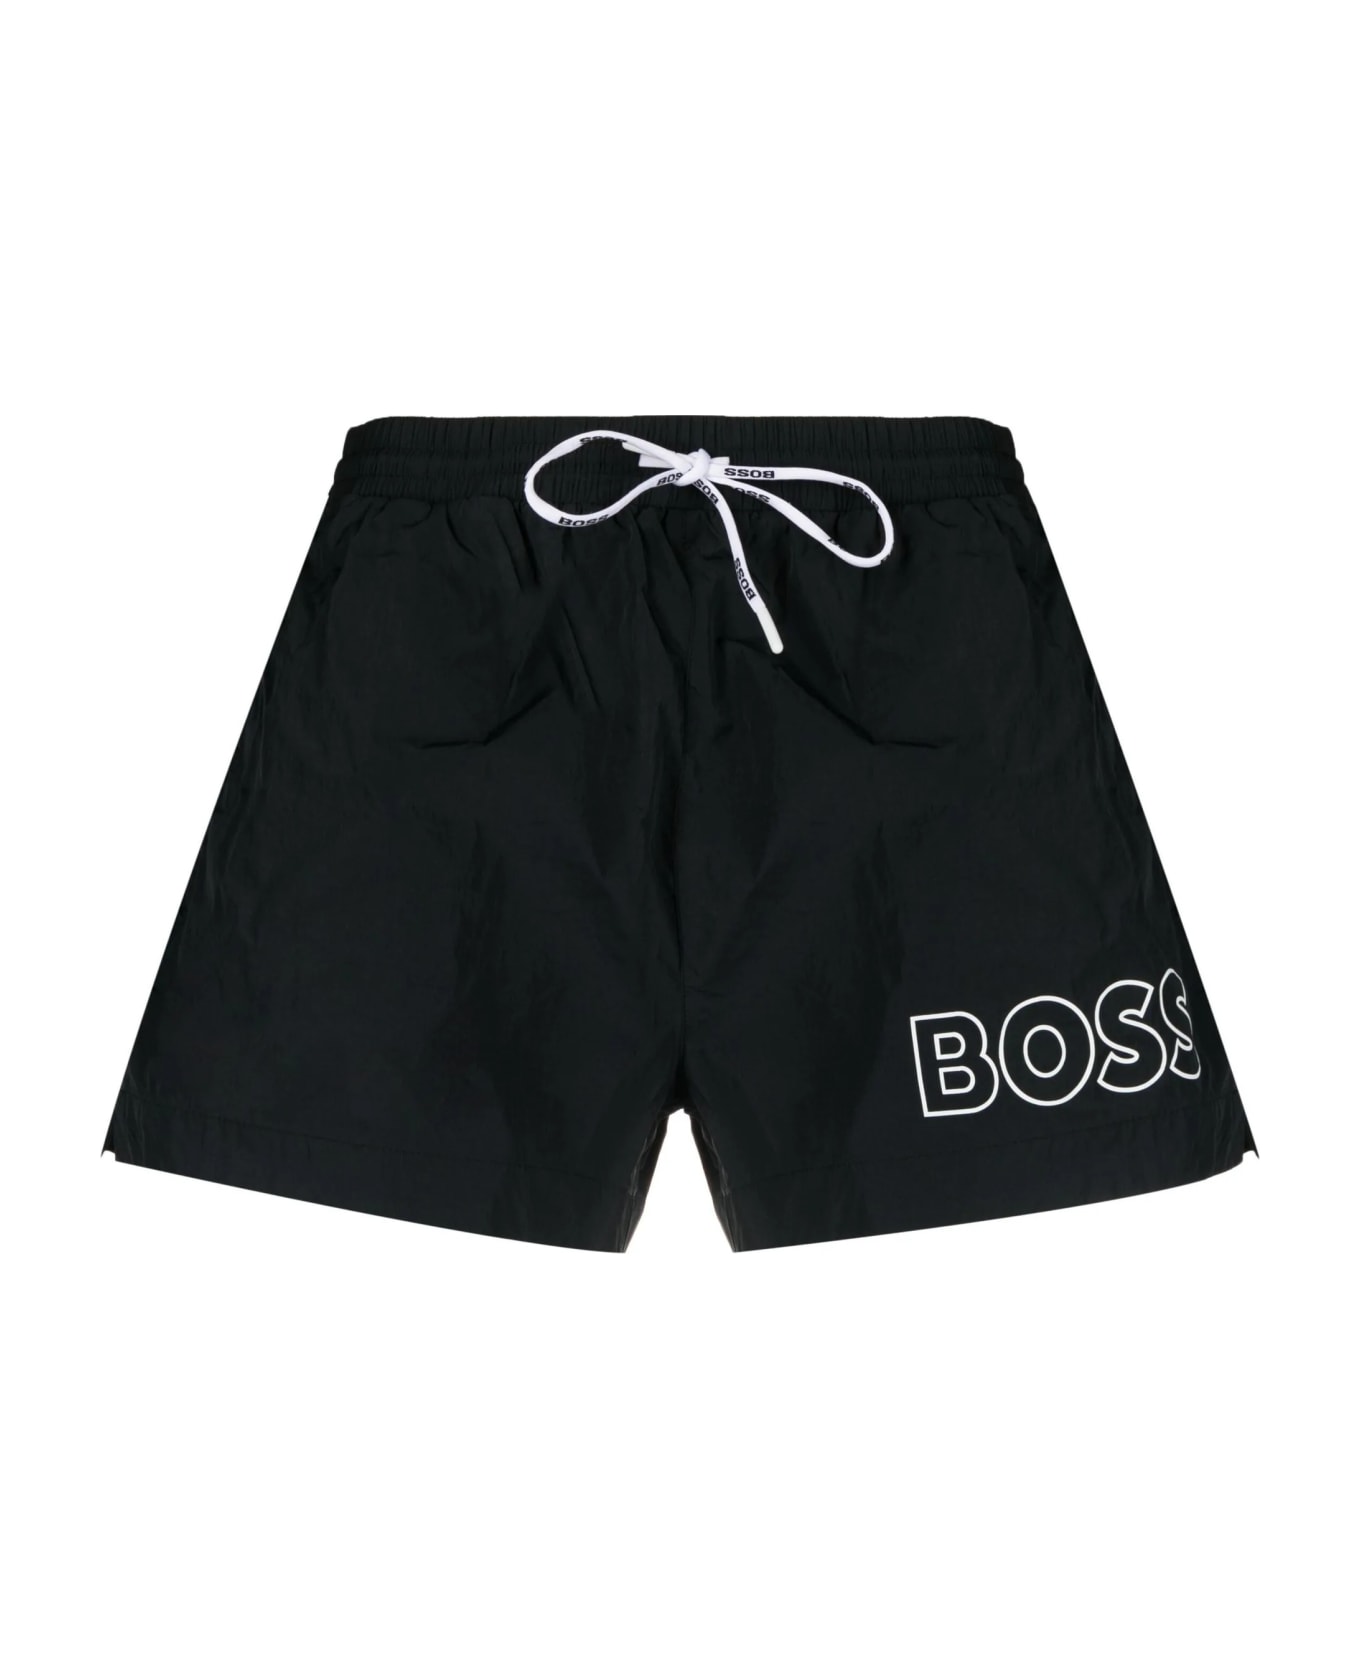 Hugo Boss Black Quick-drying Beach Boxers With Profiled Logo - Black